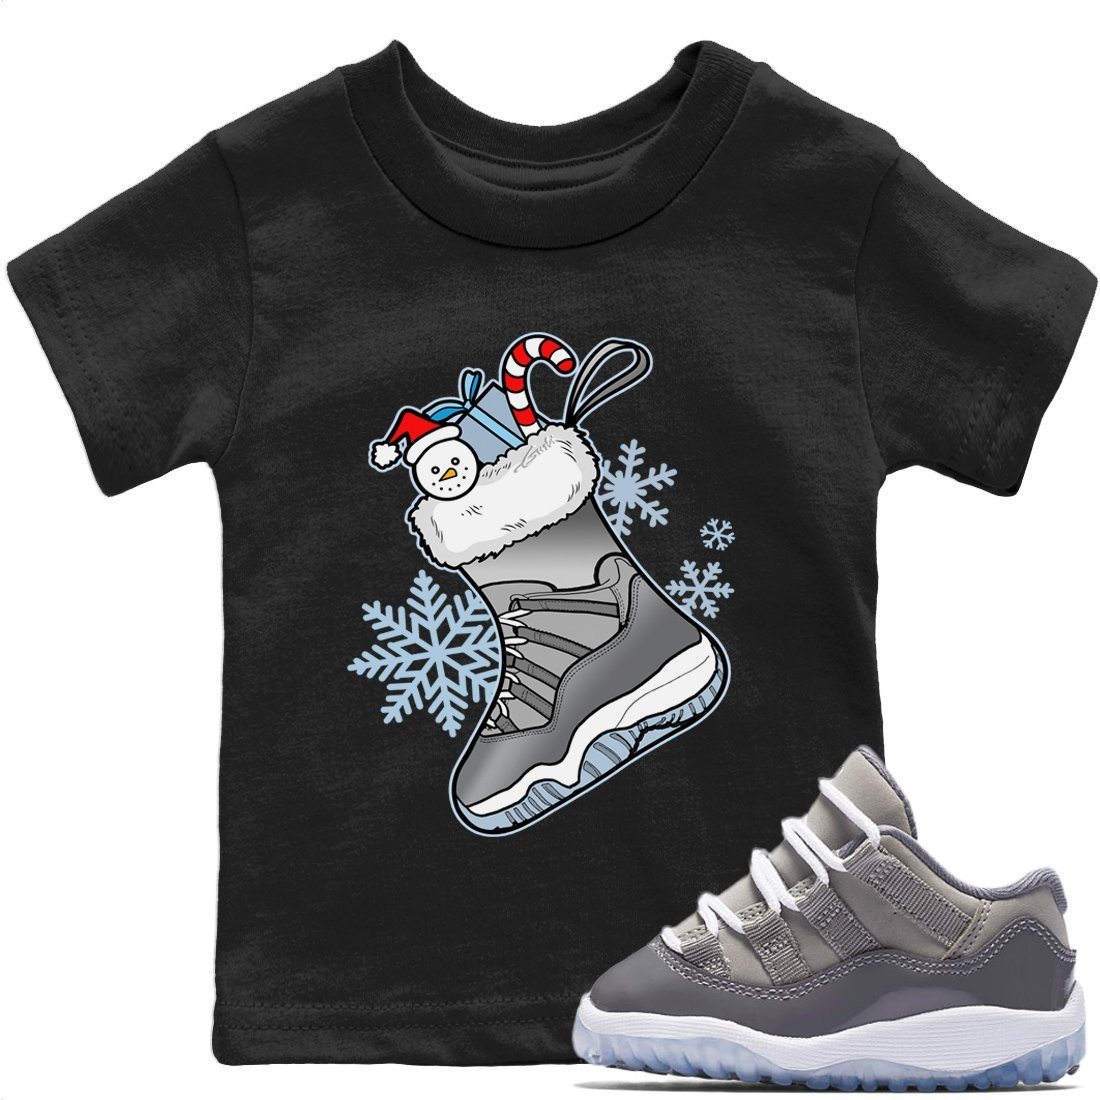 Jordan 11 Cool Grey Sneaker Match Tees Sneaker Stocking Sneaker Tees Jordan 11 Cool Grey Sneaker Release Tees Kids Shirts